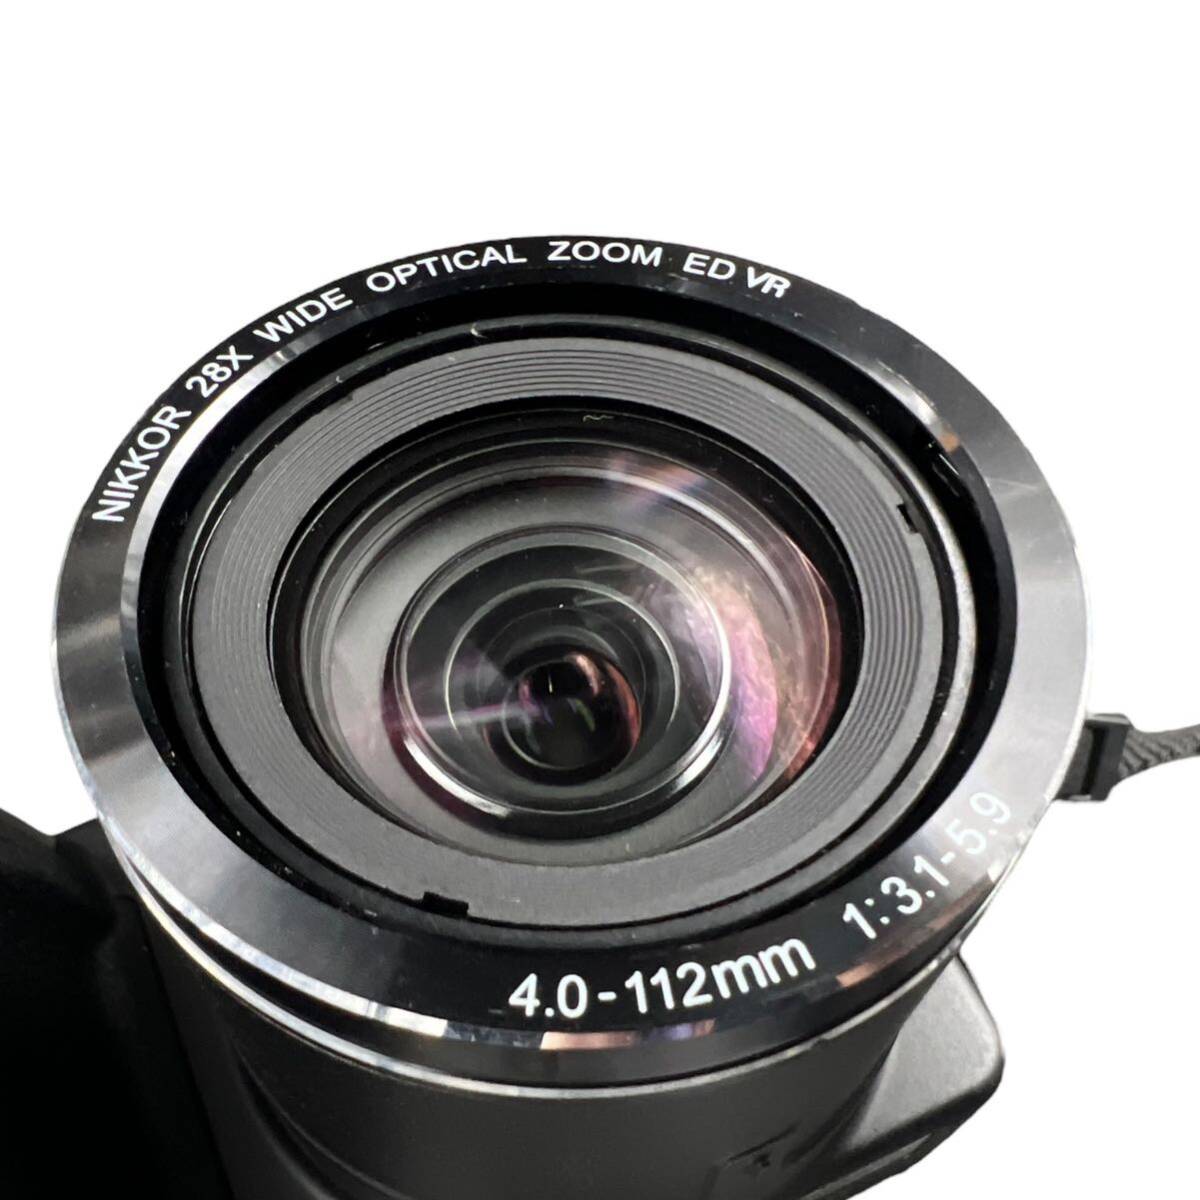 【KF1064】Nikon COOLPIX L340 コンパクトデジタルカメラ NIKKOR 28X WIDE OPTIAL ZOOM ED VR 4.0-112mm 1:3.1-5.9 ニコン_画像7